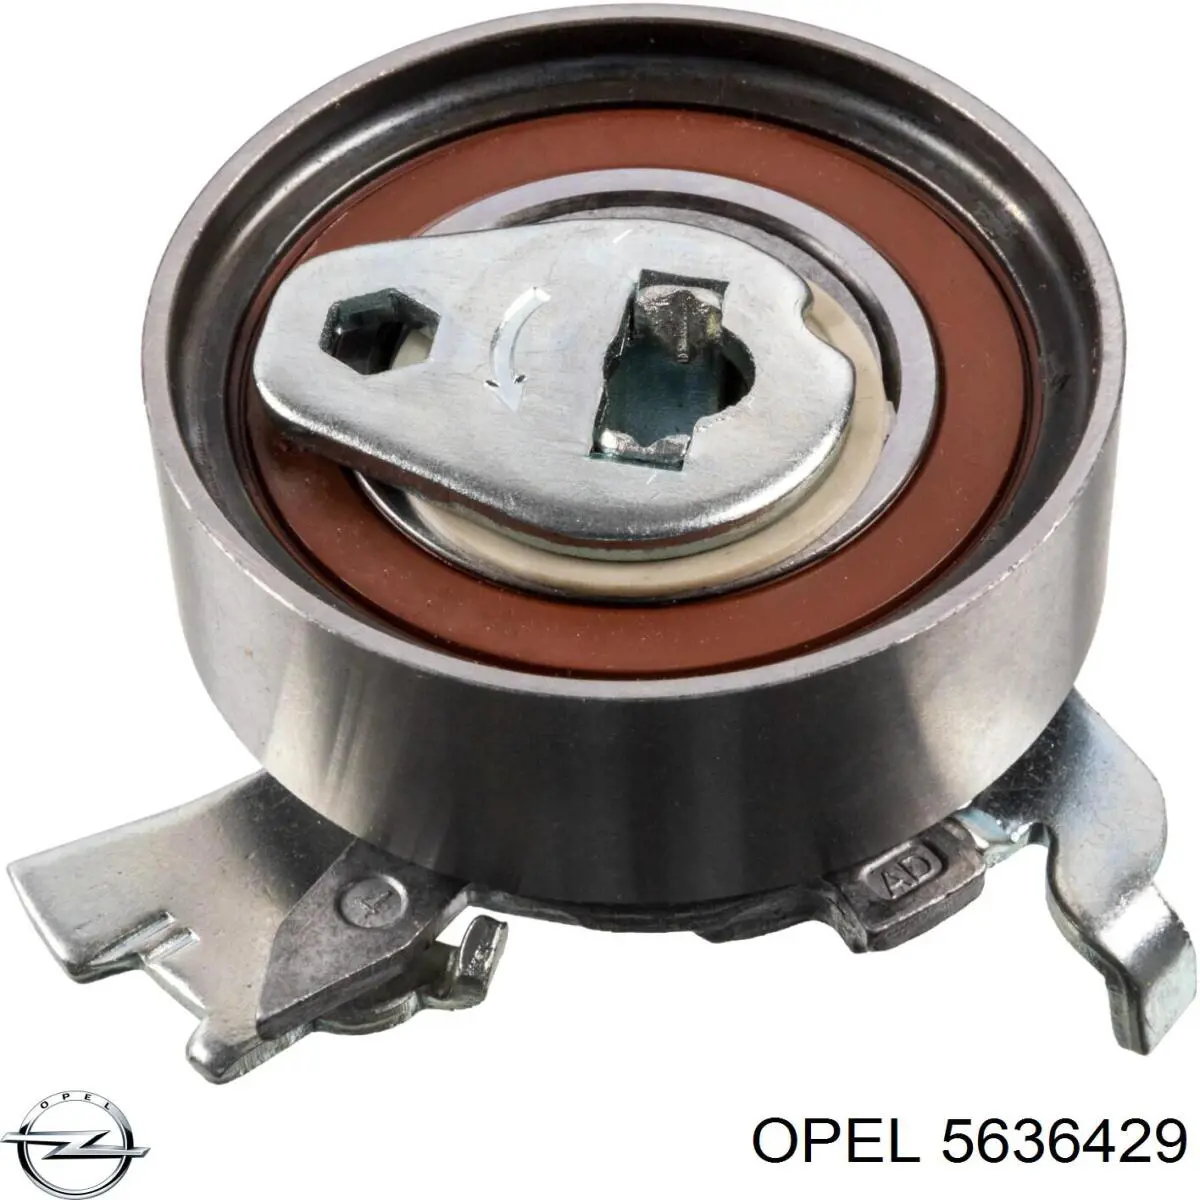 5636429 Opel ролик грм